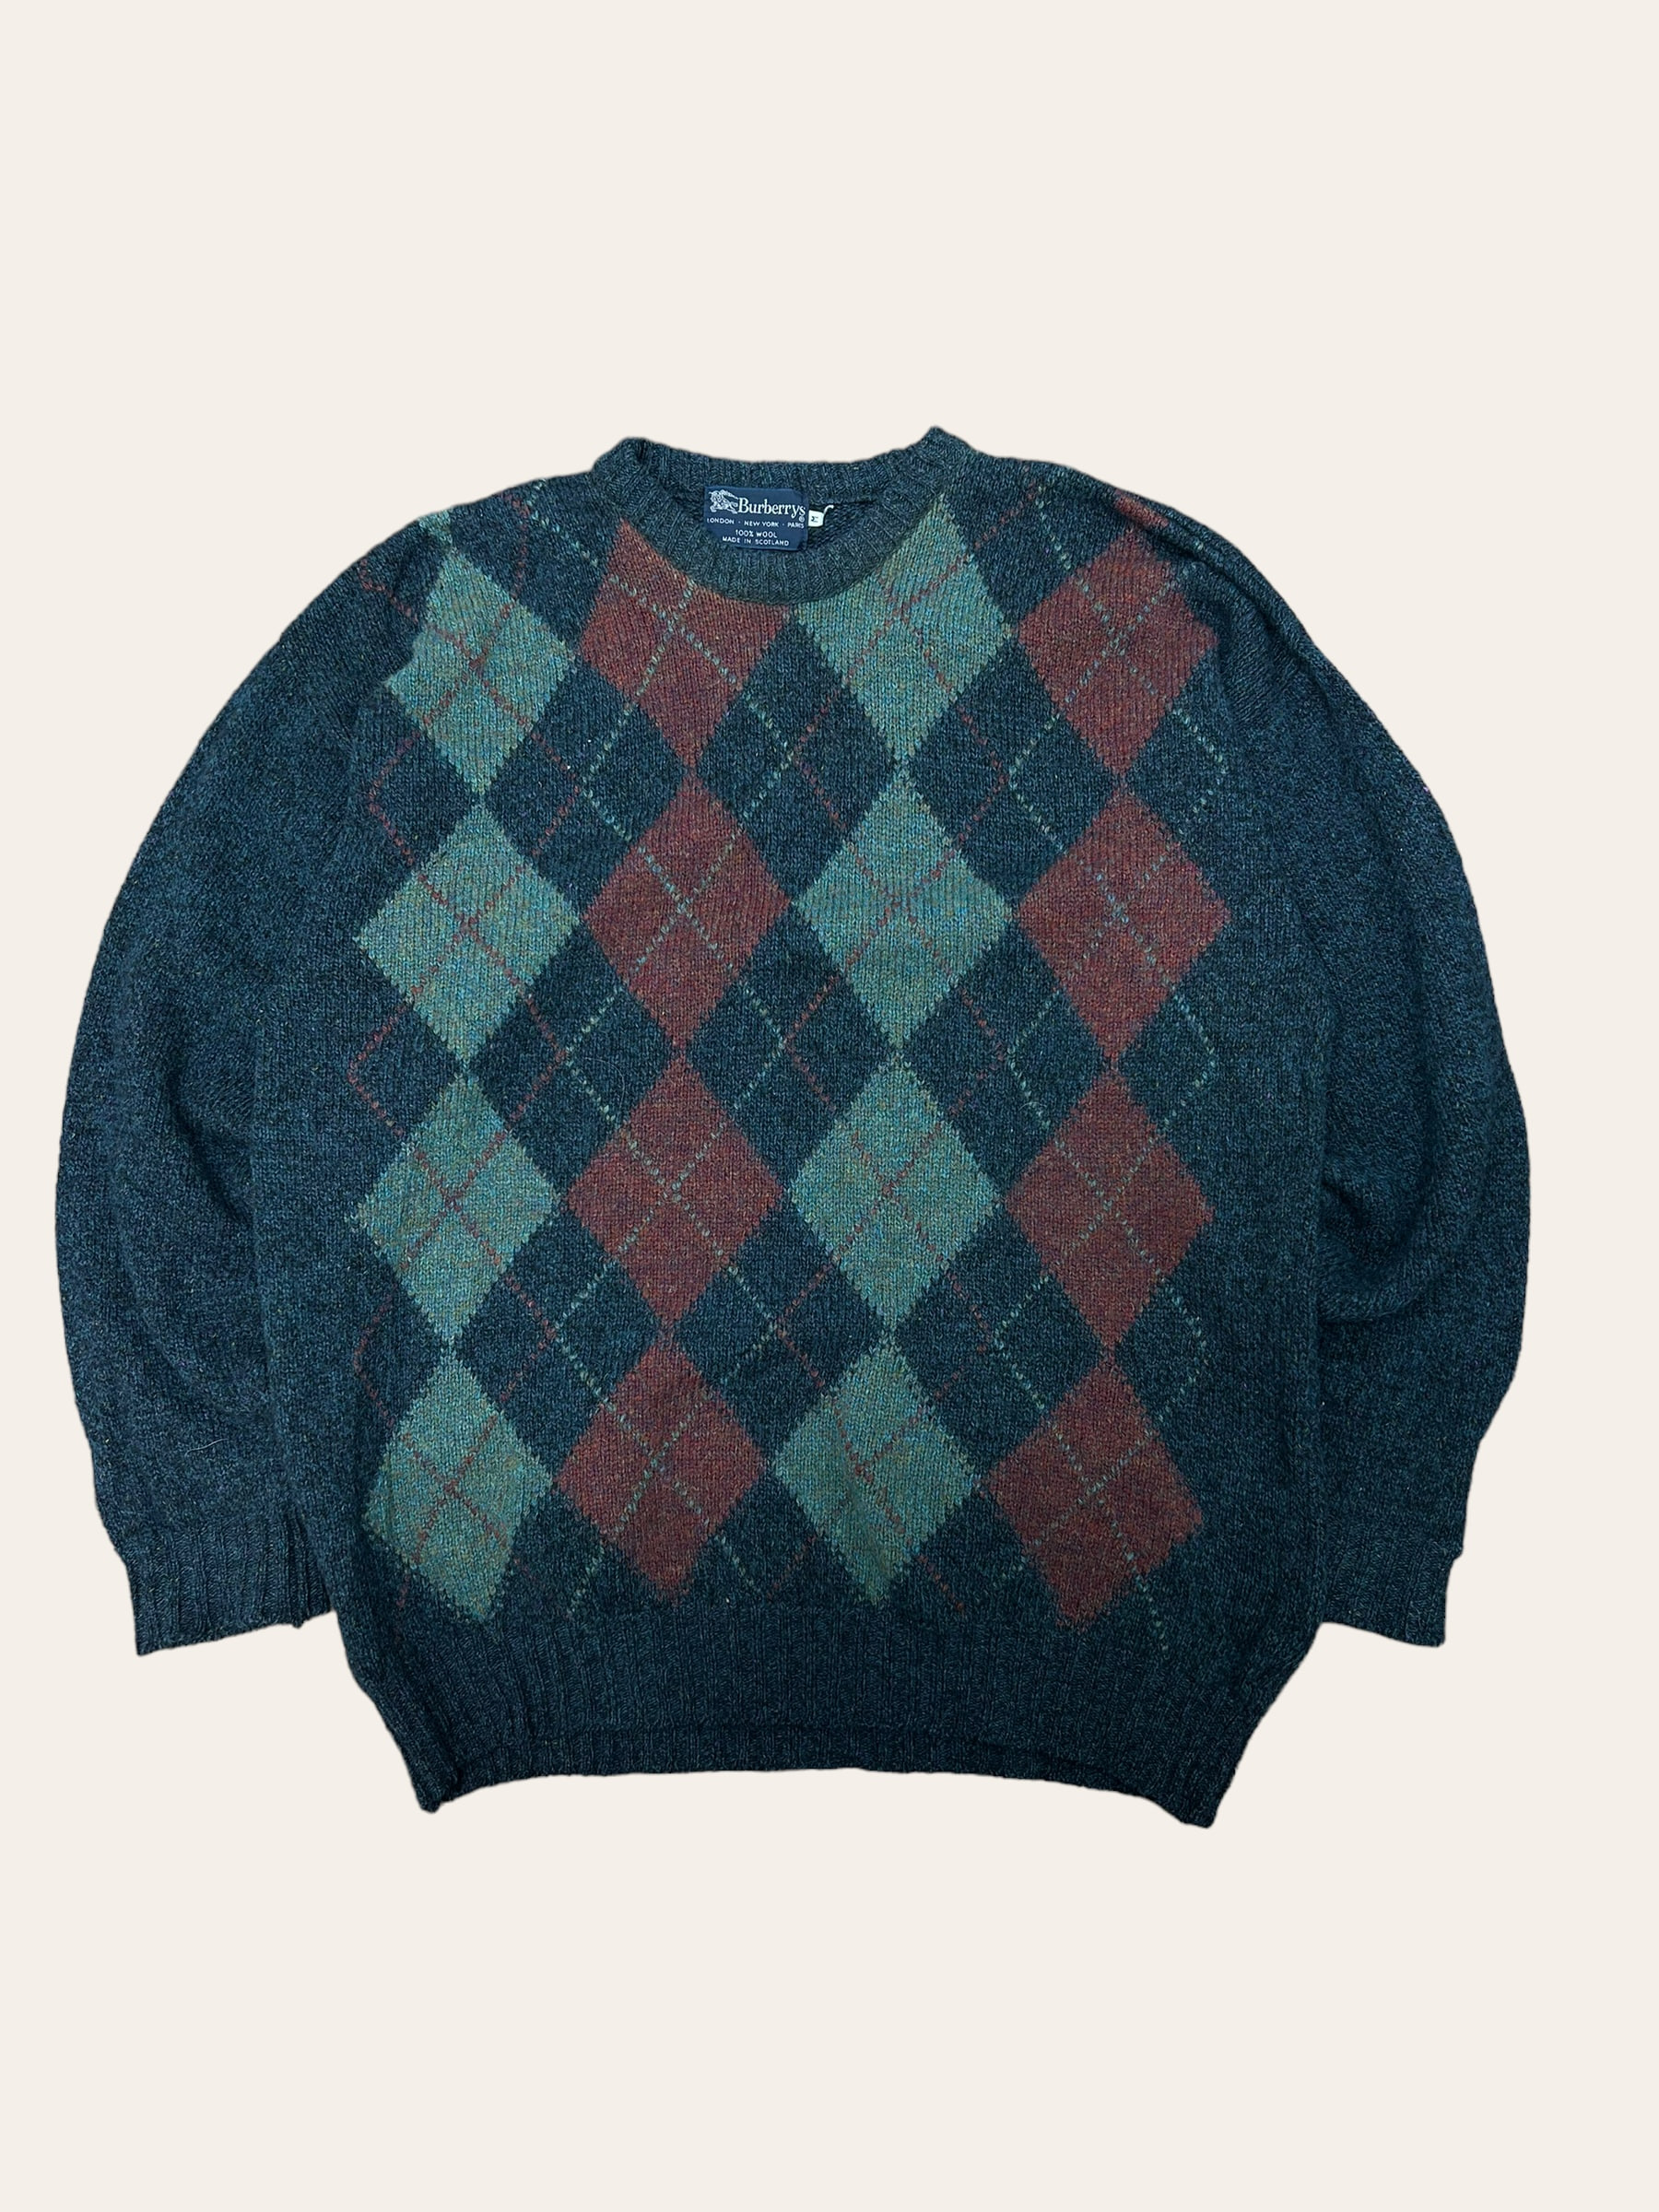 Burberry wool agyle pattern crewneck sweater M